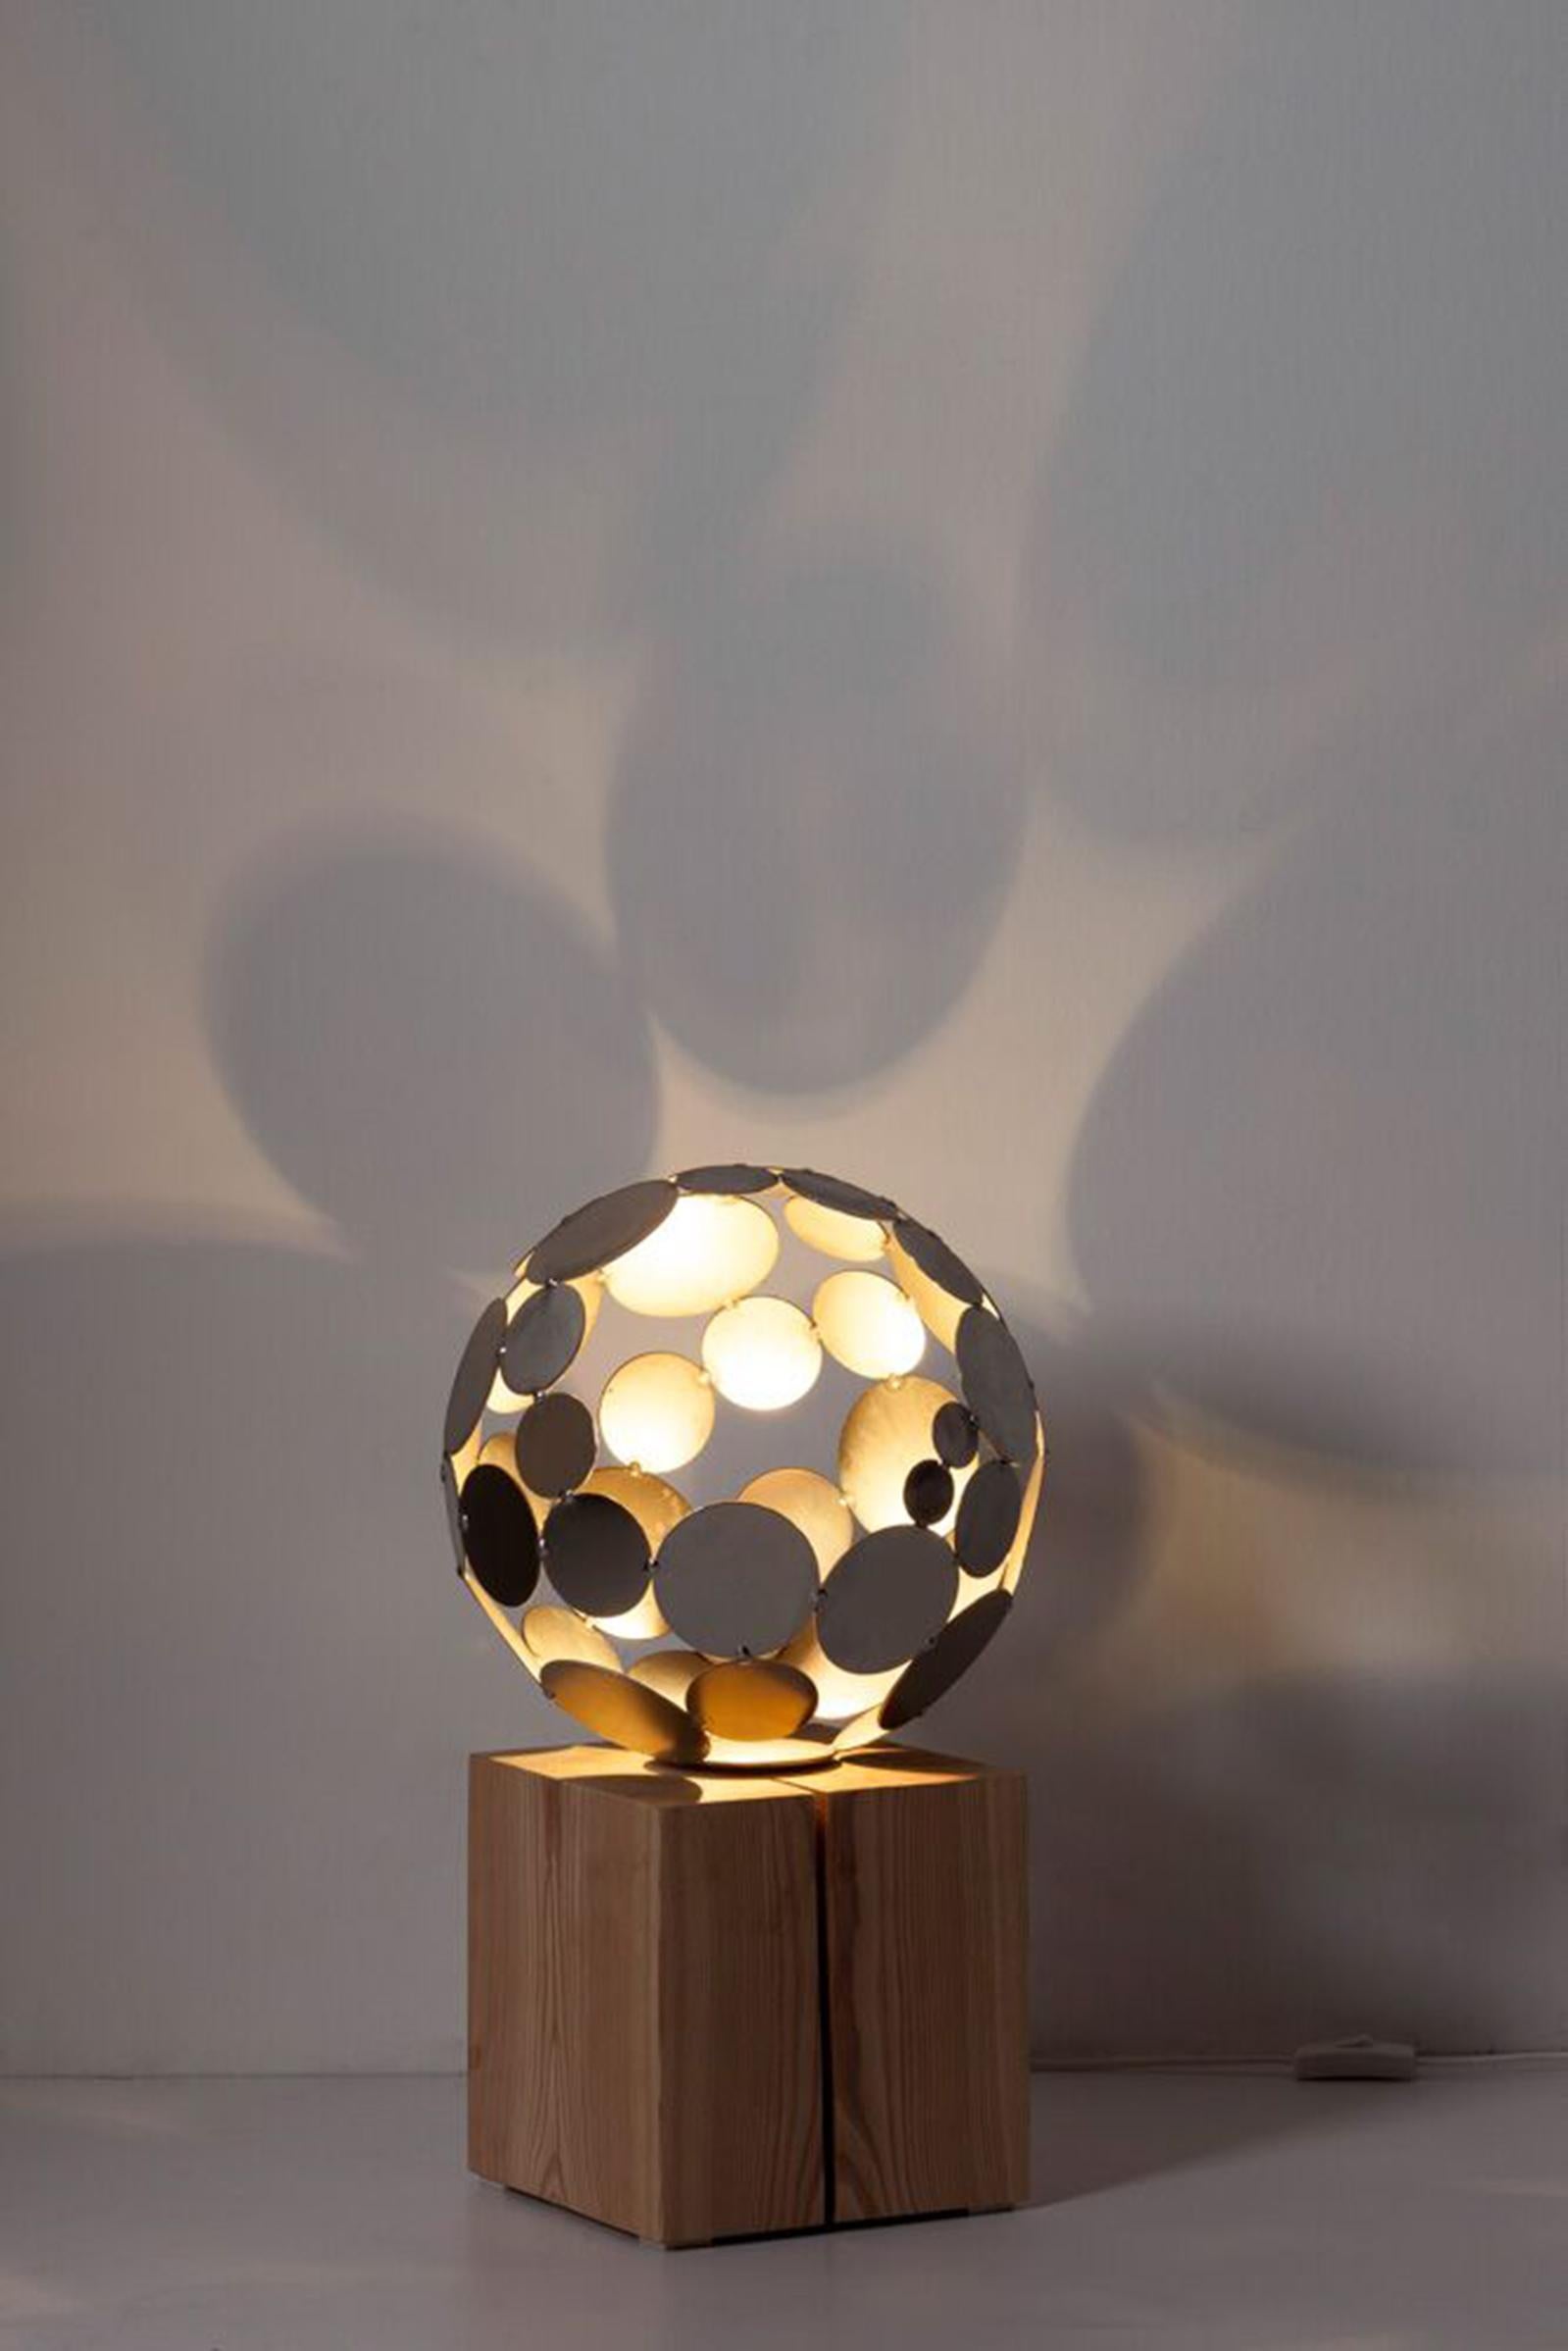 Contemporary Sculpture - "Globe Lamp", rusted on an oak pedestal - small height - Art by Stefan Traloc